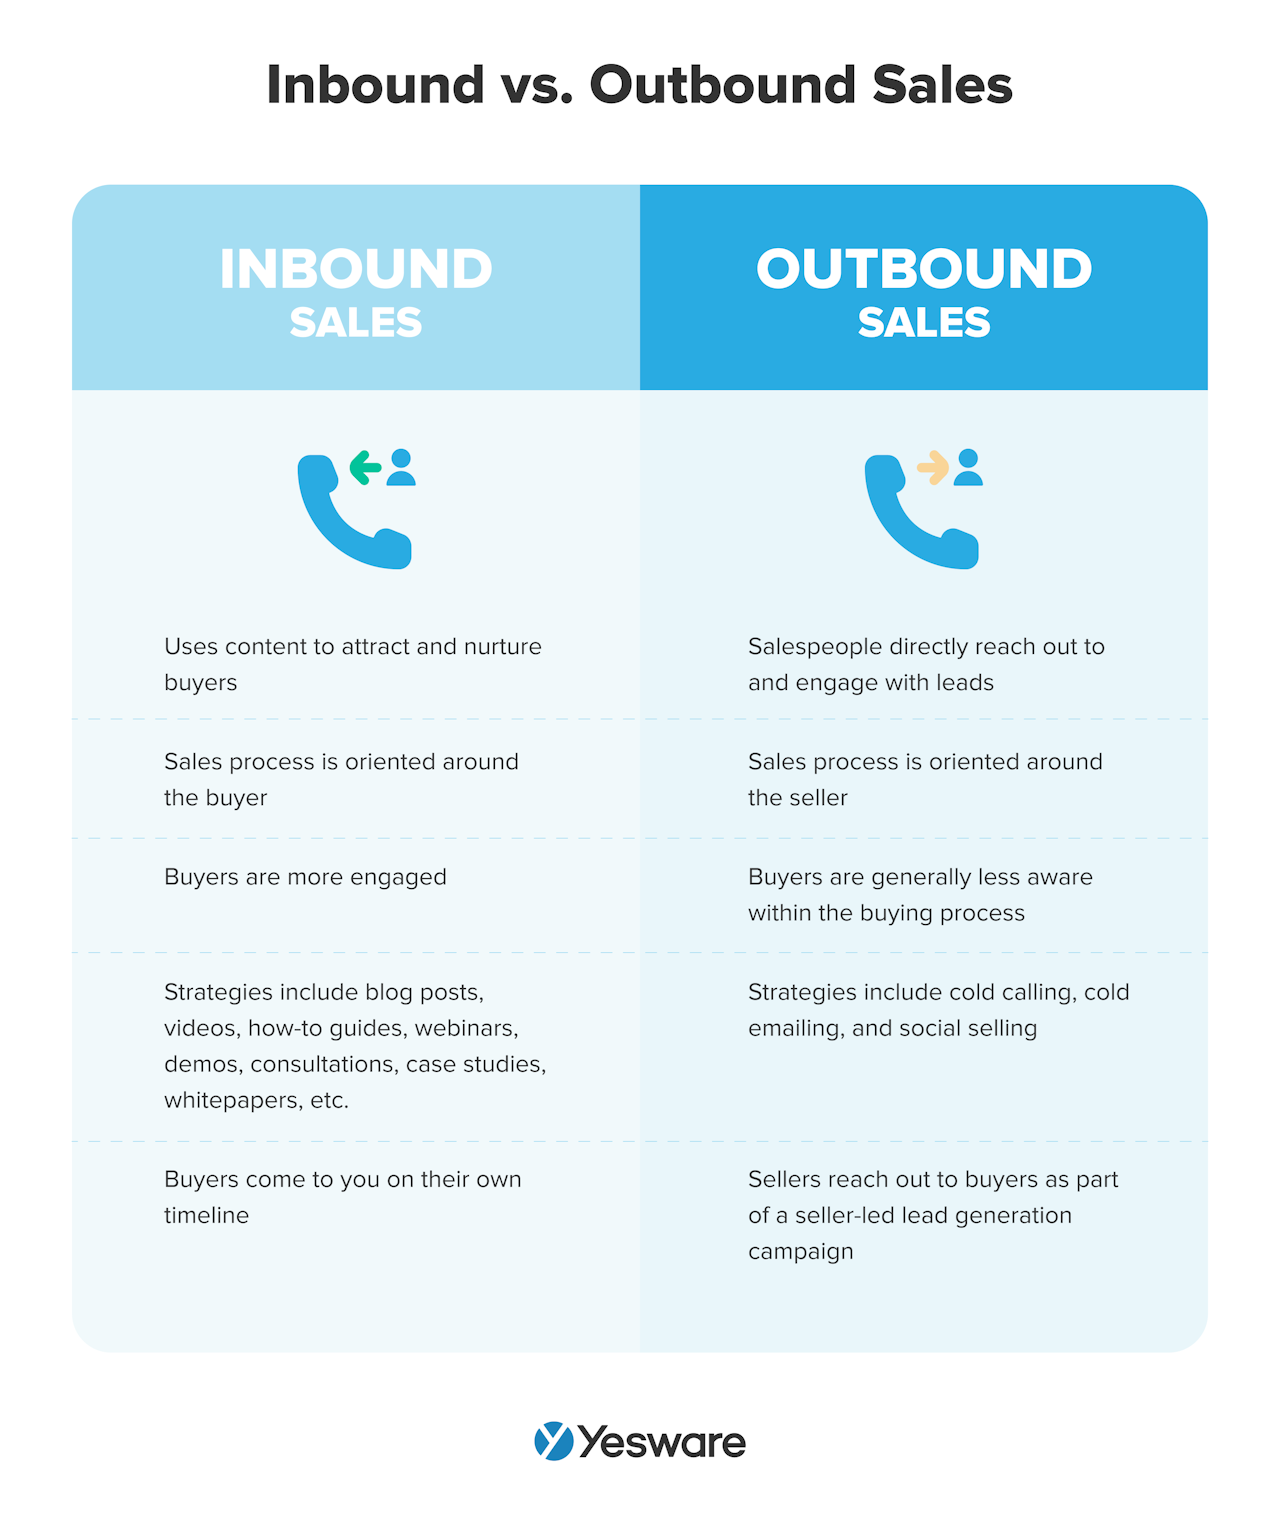 sales 101: inbound vs outbound sales